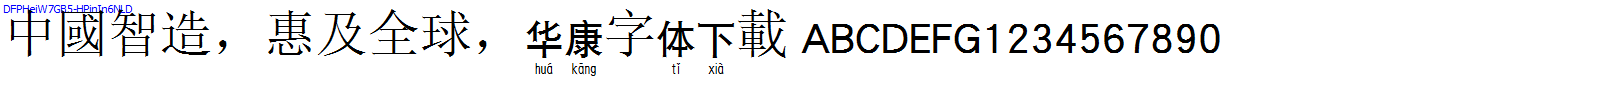 華康字體DFPHeiW7GB5-HPinIn6NLD.TTF